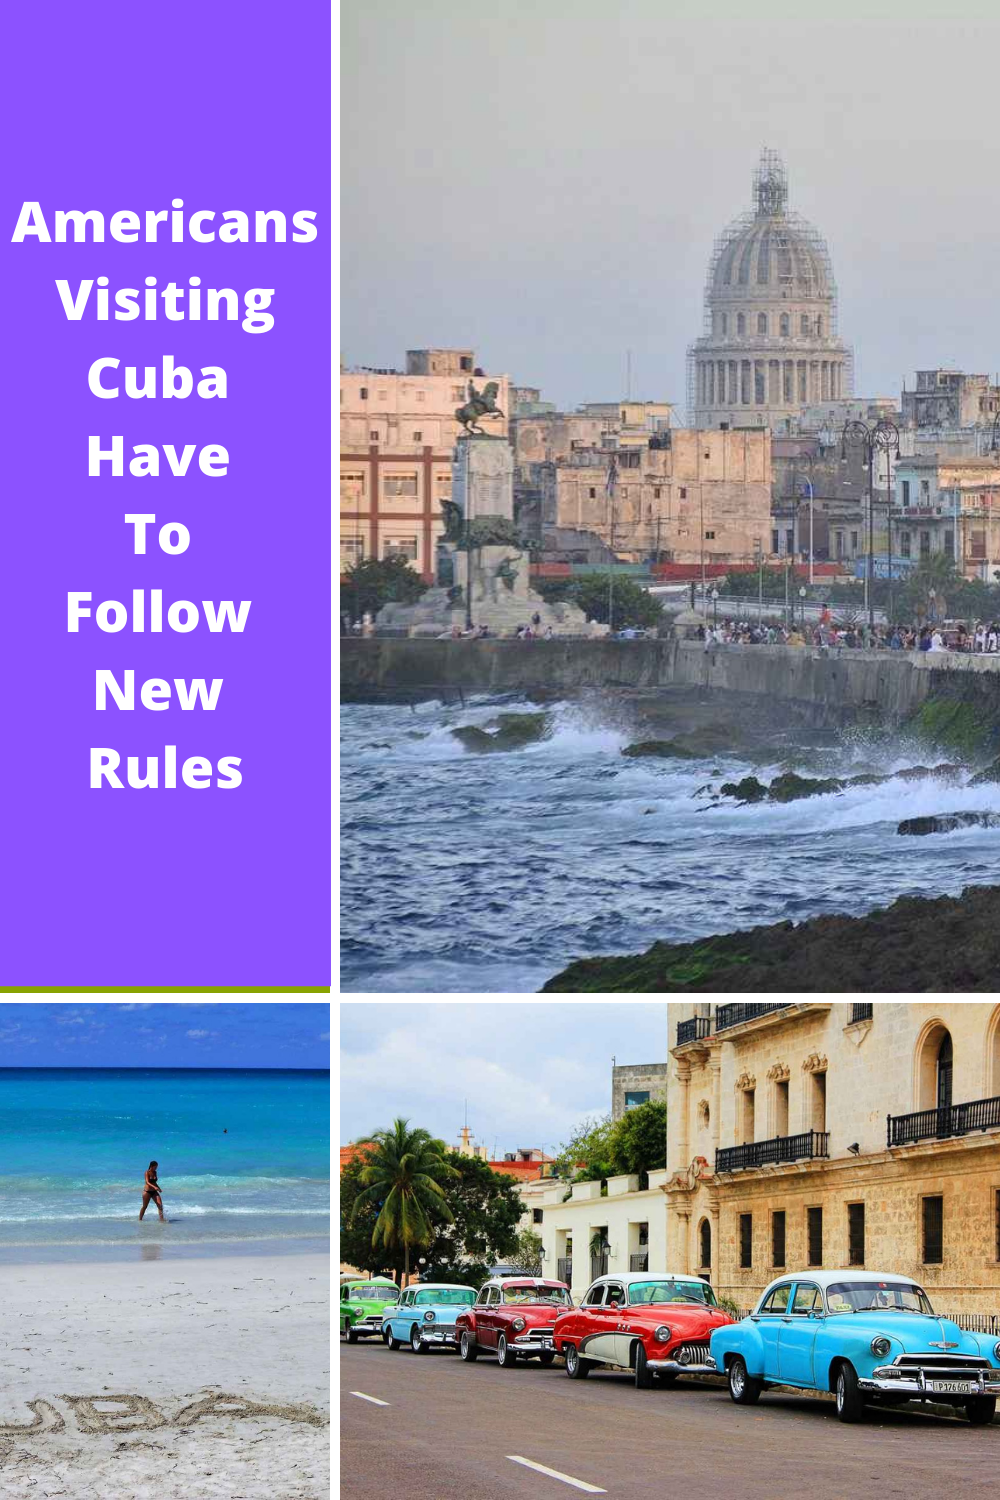 New Protocols In Cuba For Visitors